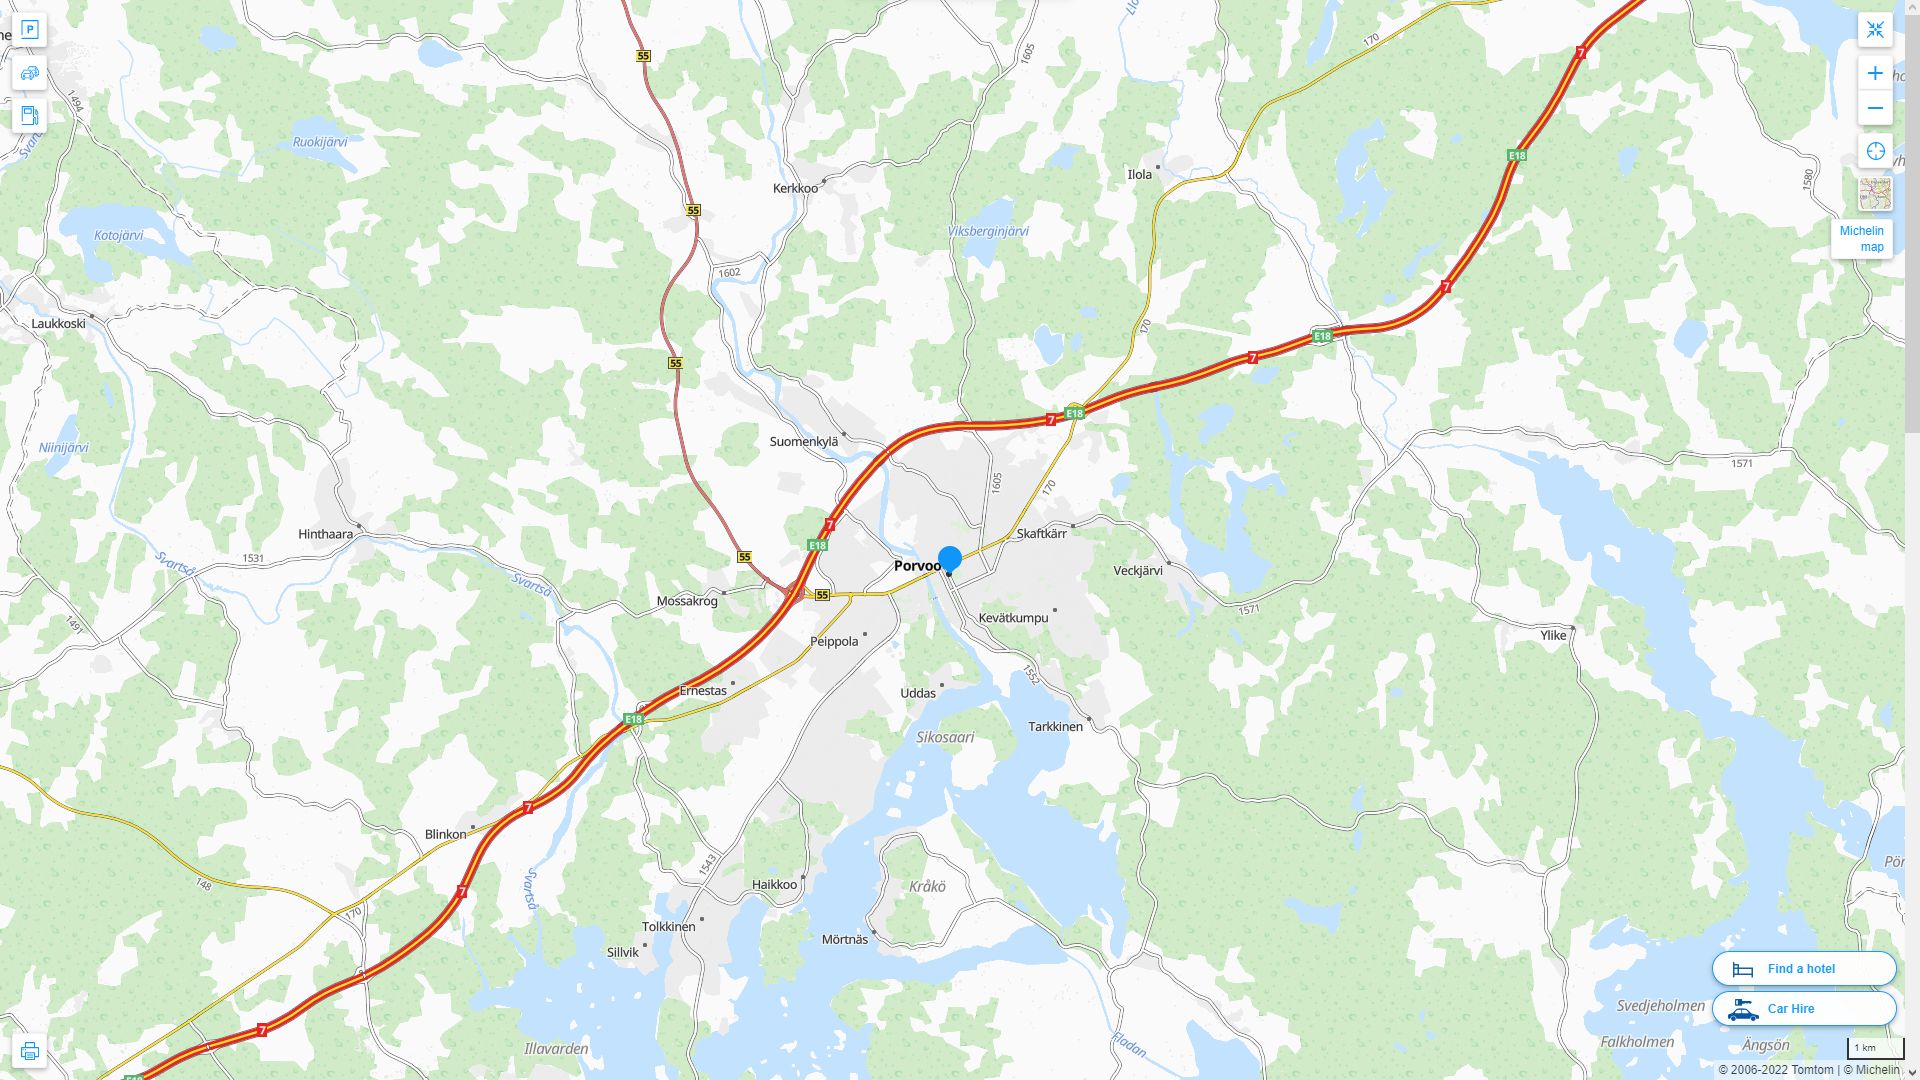 Porvoo Finlande Autoroute et carte routiere